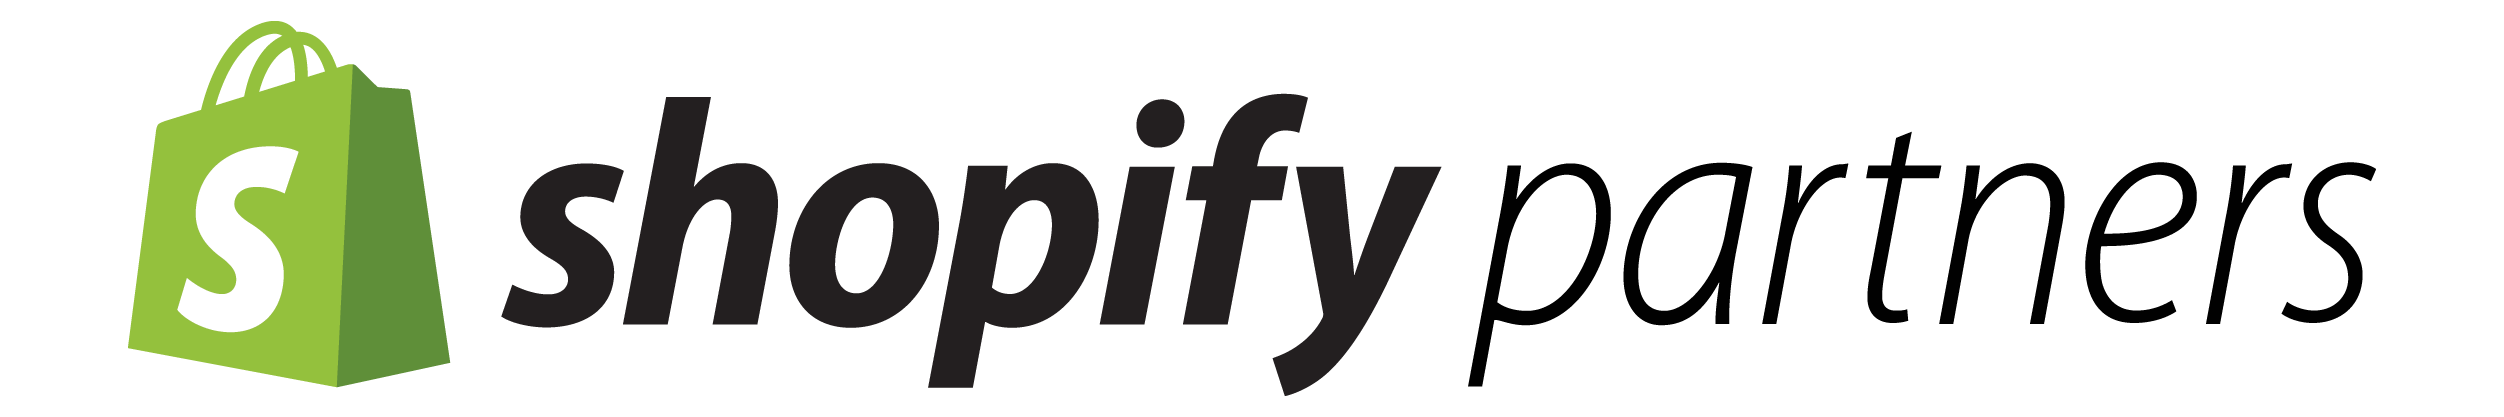 shopify partners